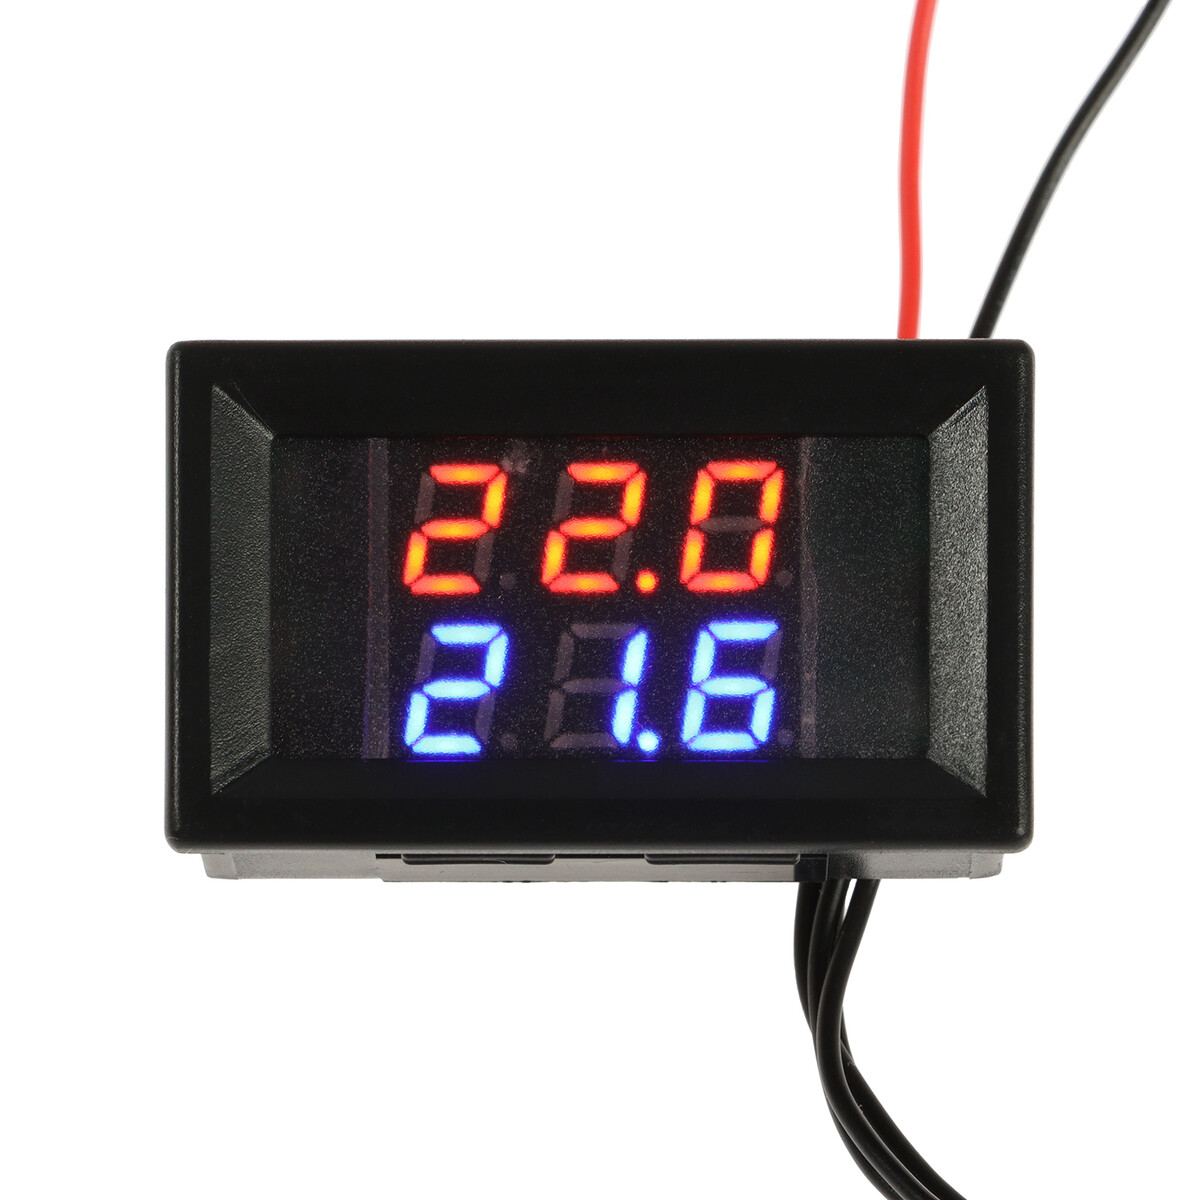 Термометр цифровой, жк-экран, провод 1.5 м, 45×26 мм, -20-100 °c термометр цифровой beka thermomeater